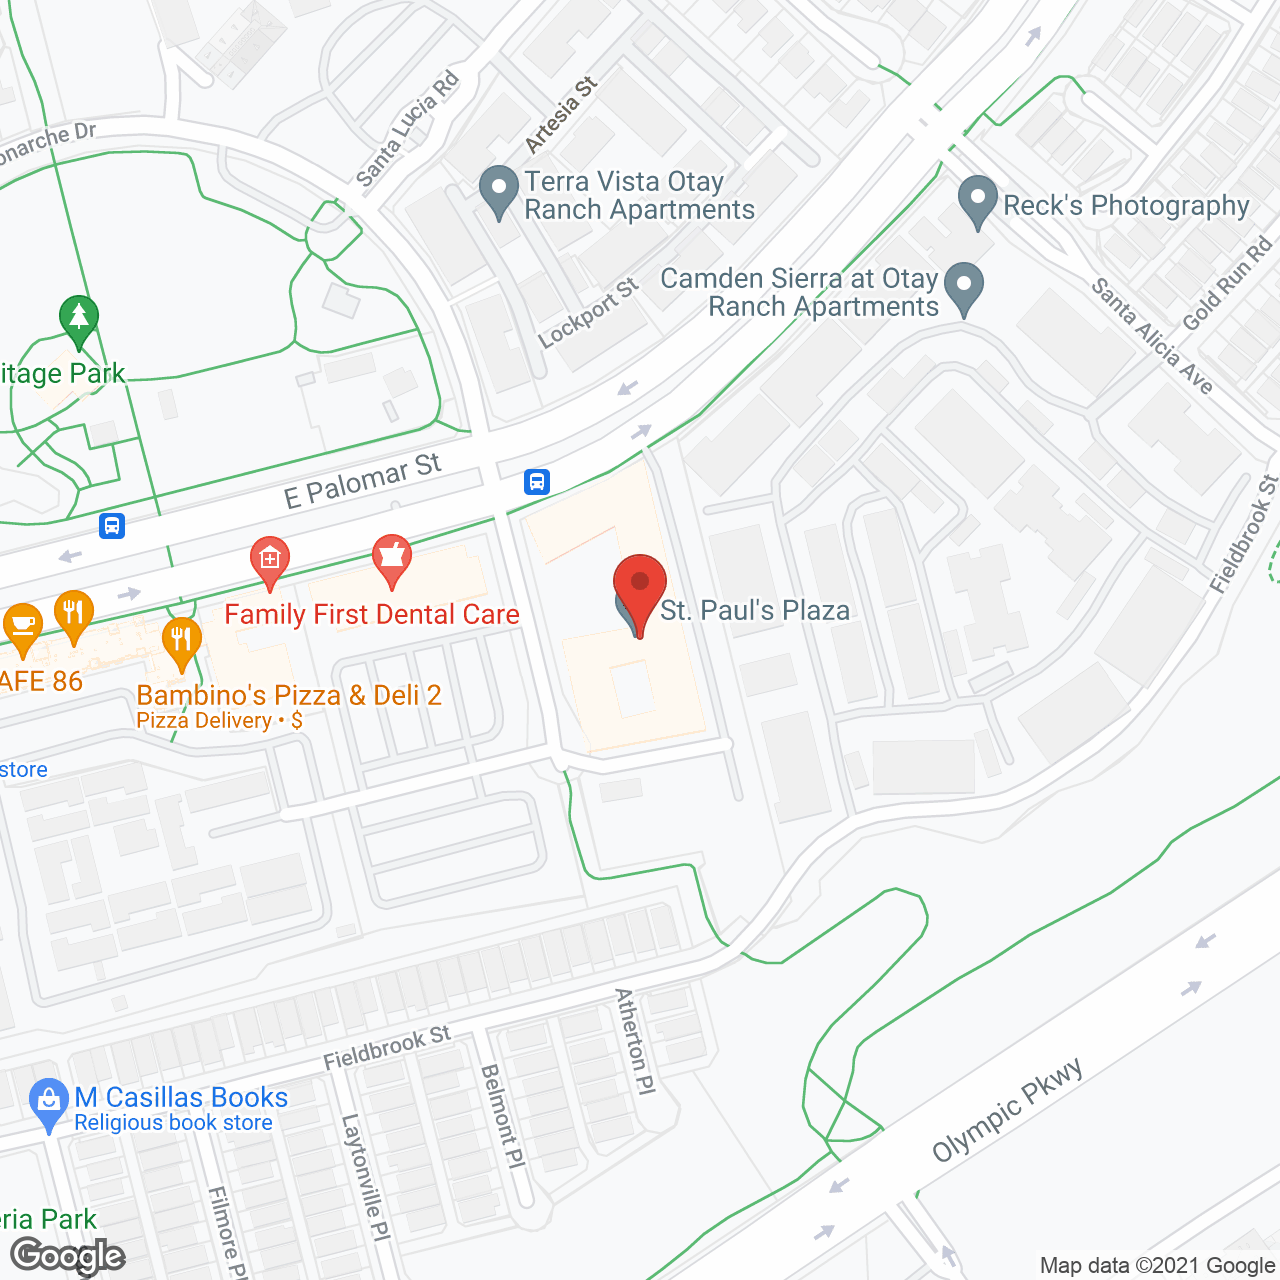 St. Paul's Plaza in google map